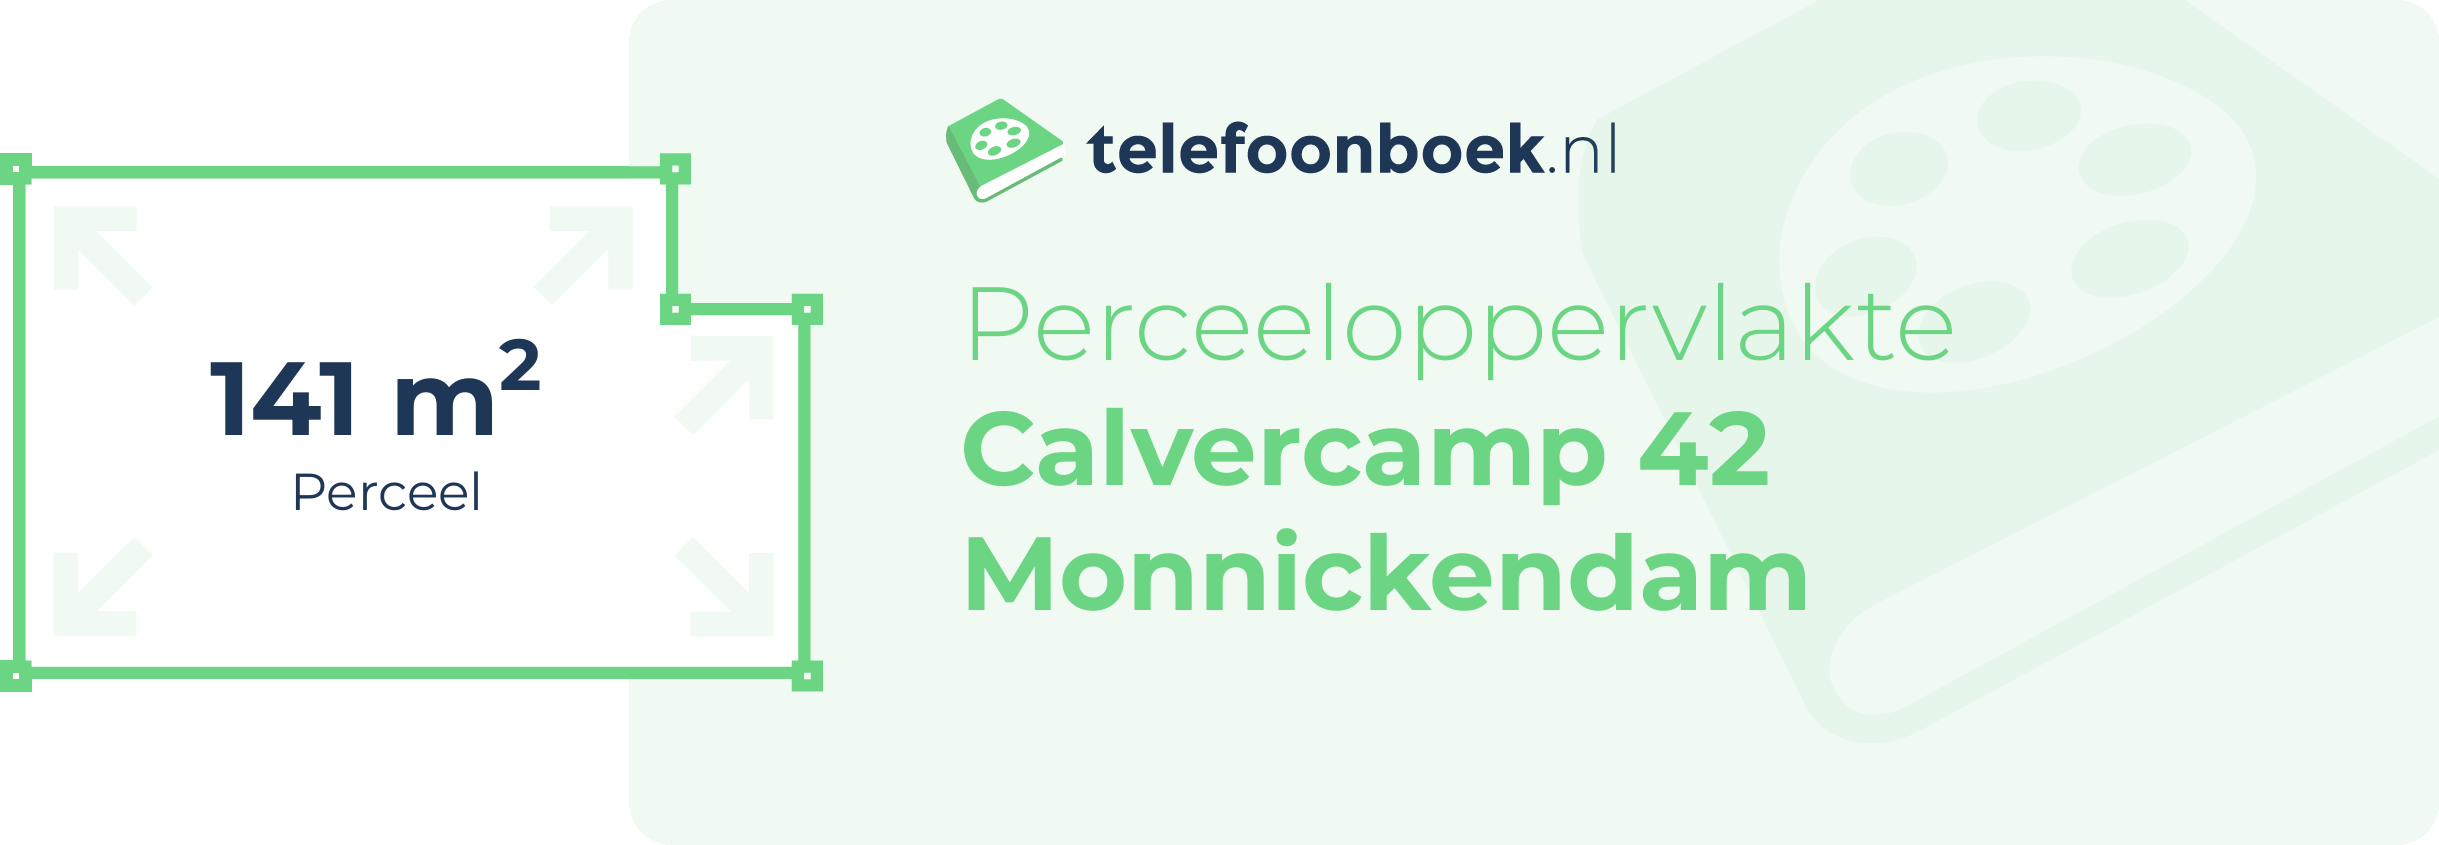 Perceeloppervlakte Calvercamp 42 Monnickendam